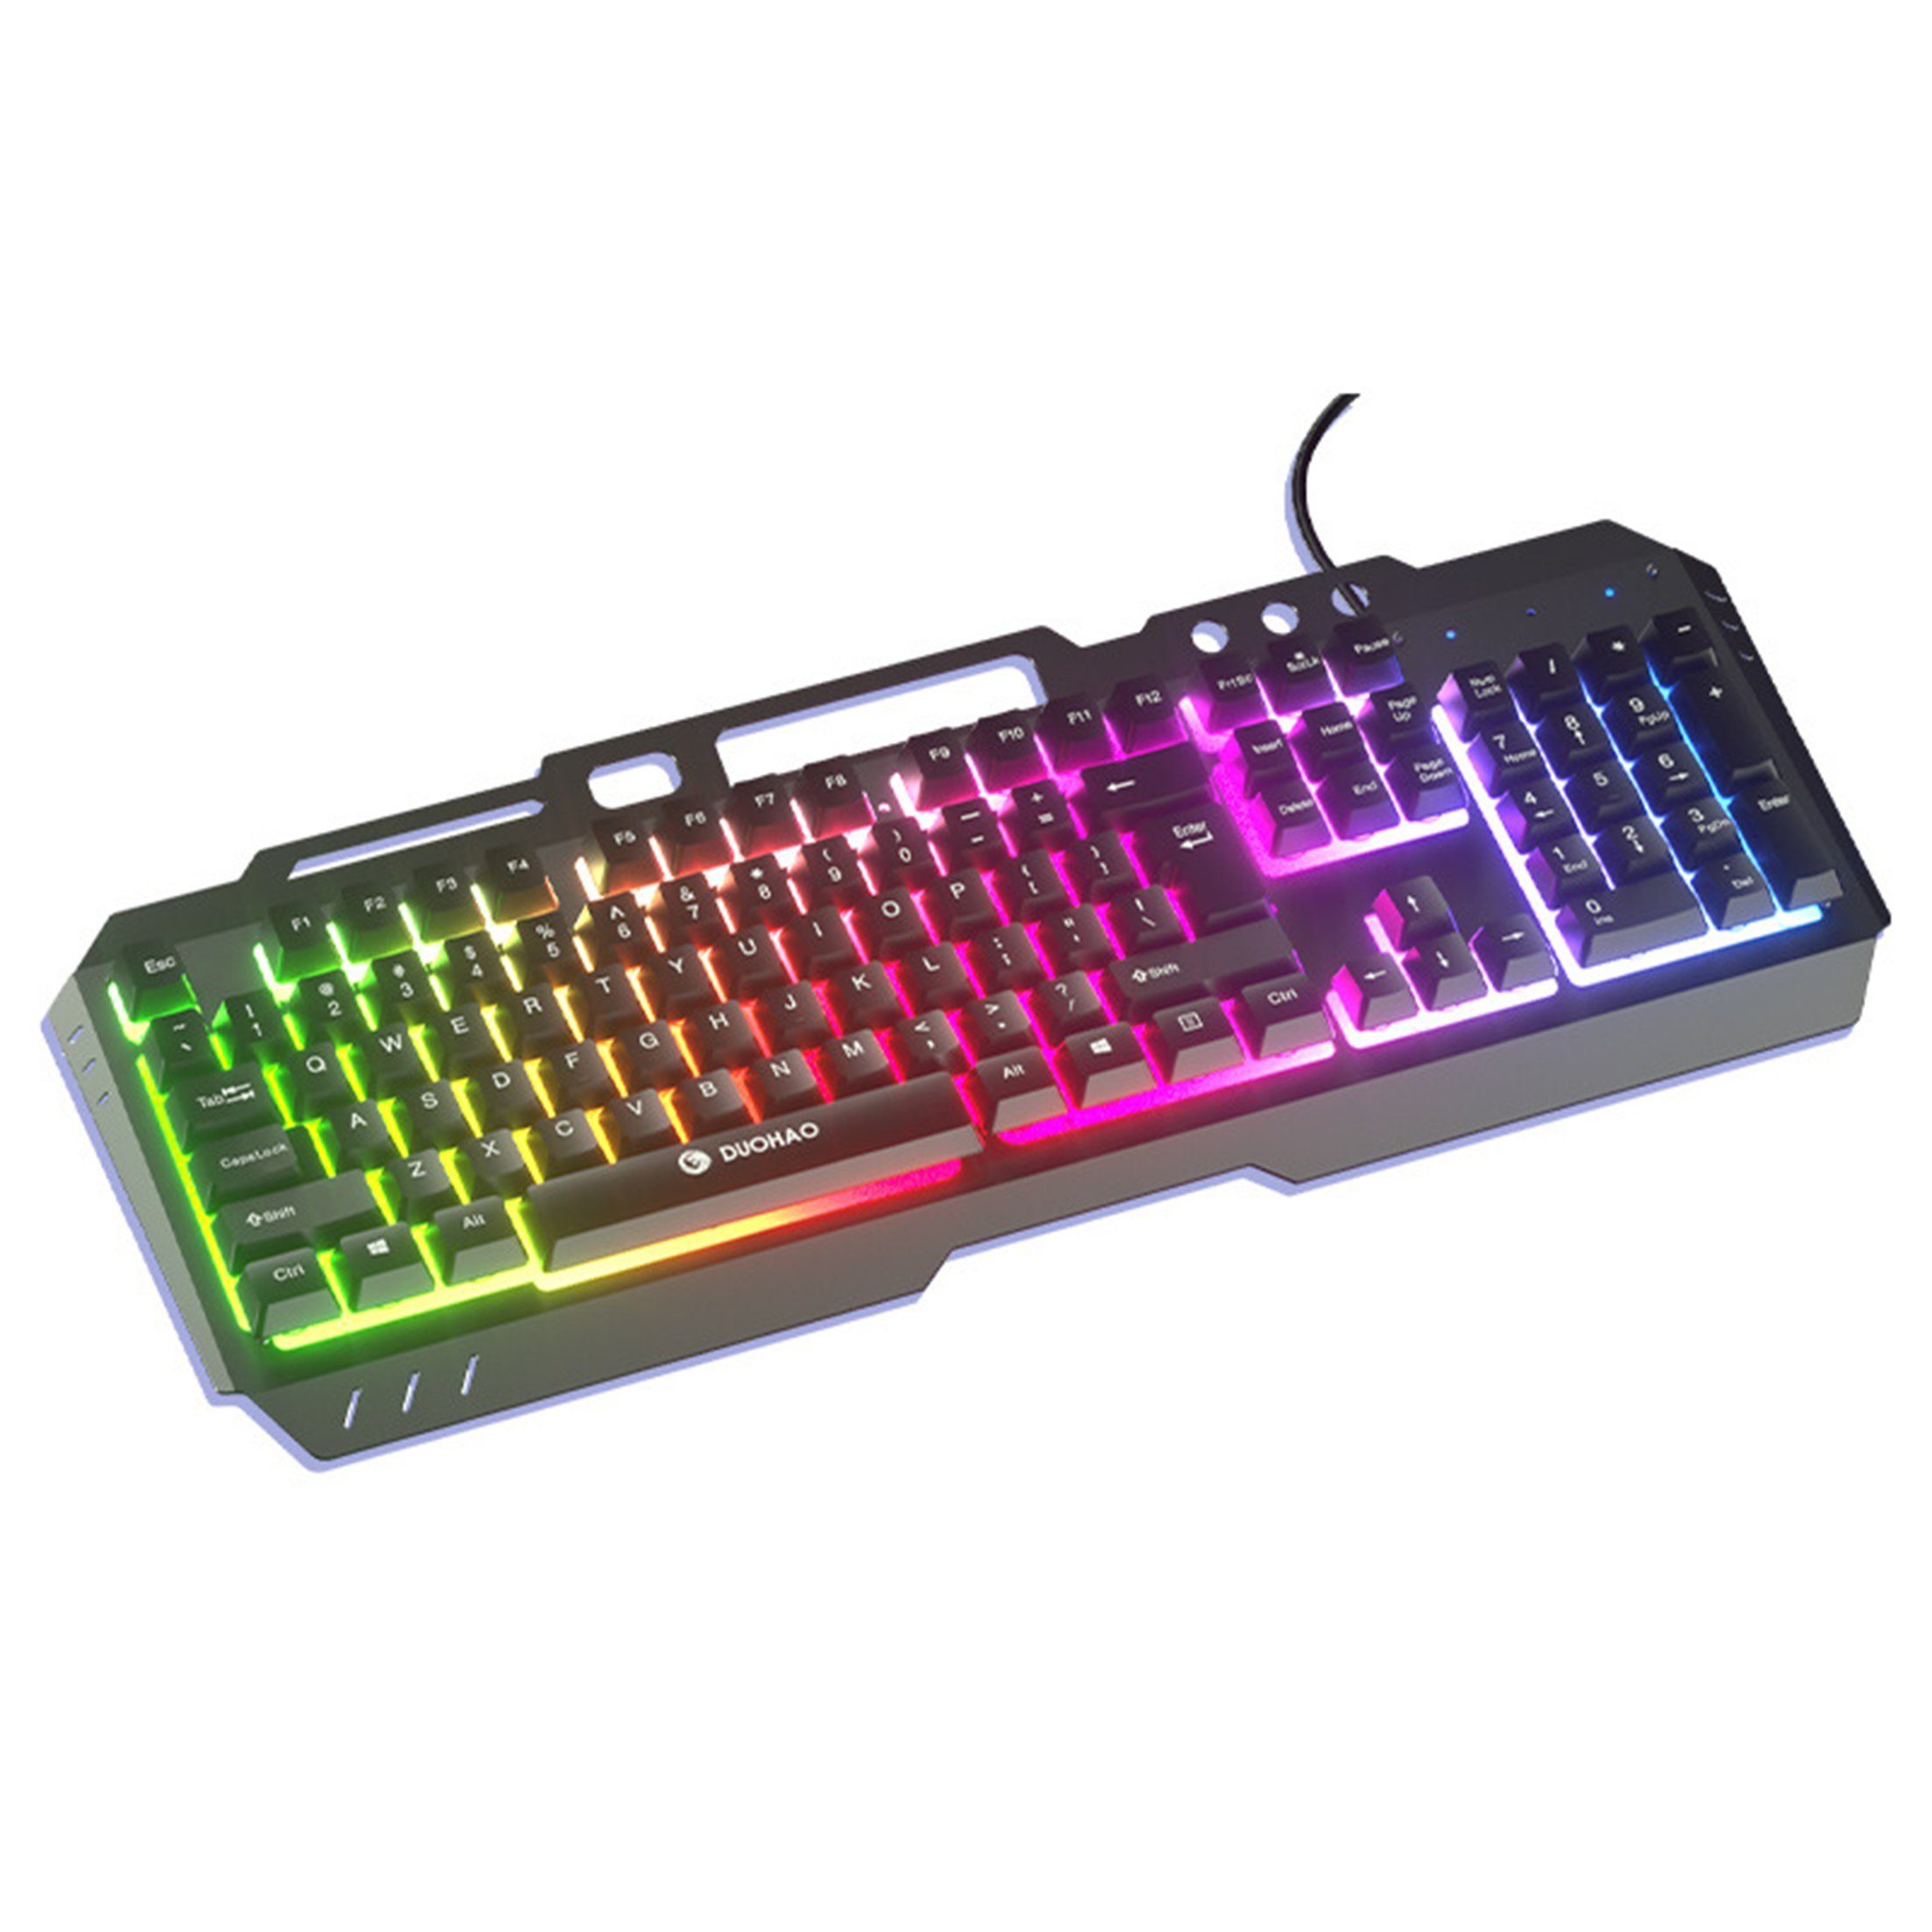 KINSI USB-Gaming-Tastatur,mechanische Tastatur,RGB-Hintergrundbeleuchtung Gaming-Tastatur (Kabelgebundene Metalltastatur,Handyhalterung)